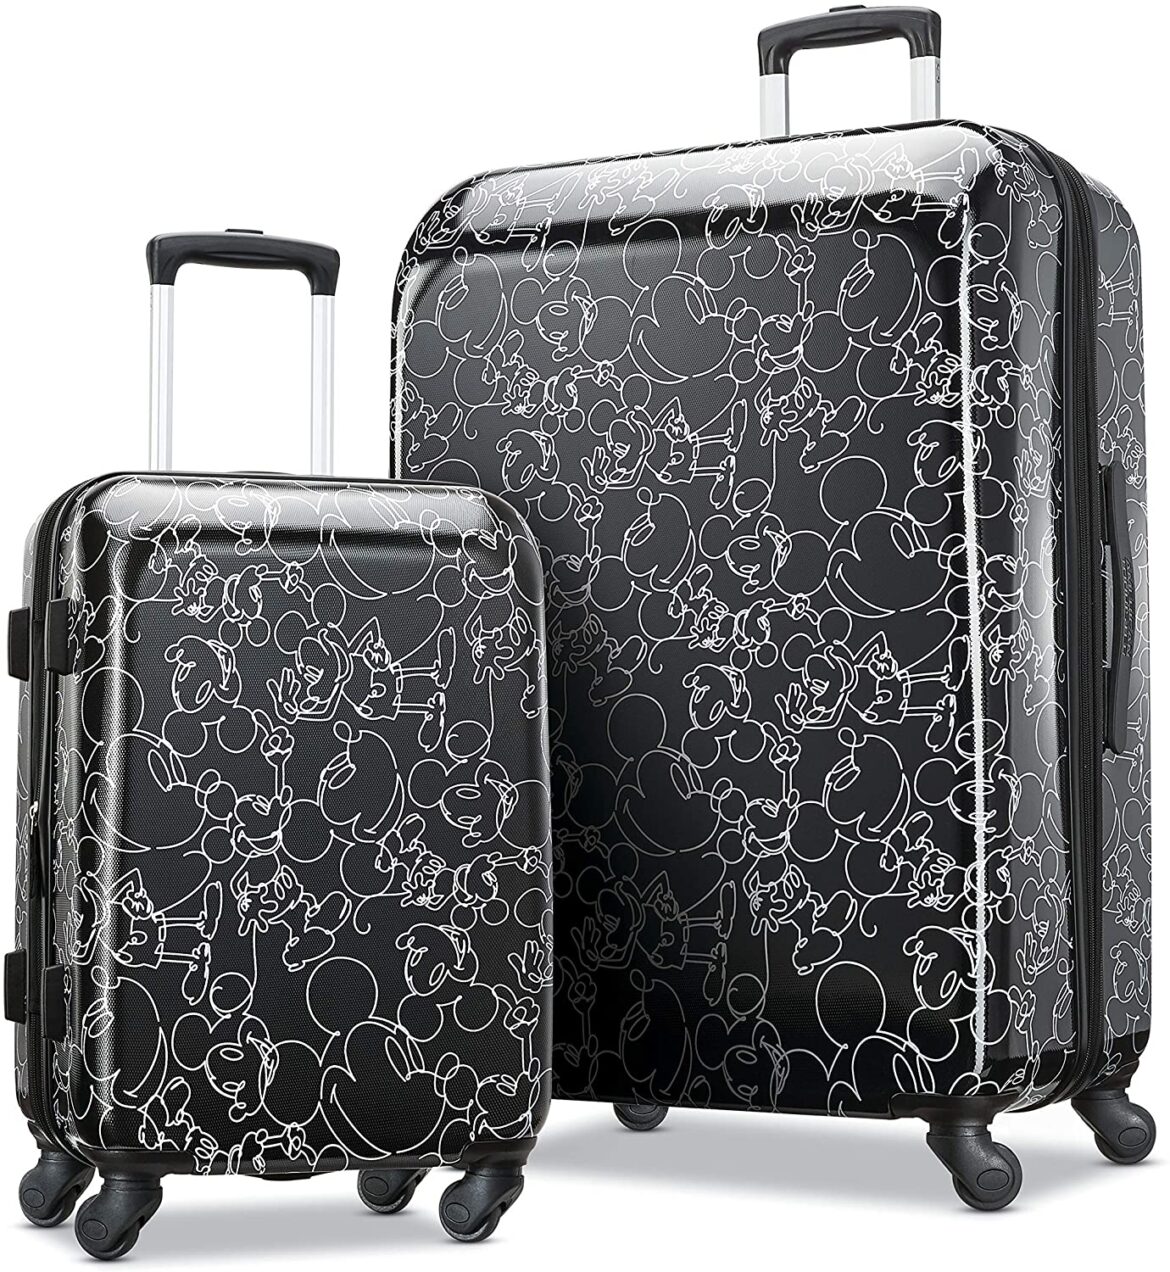 American Tourister Disney Luggage Sets